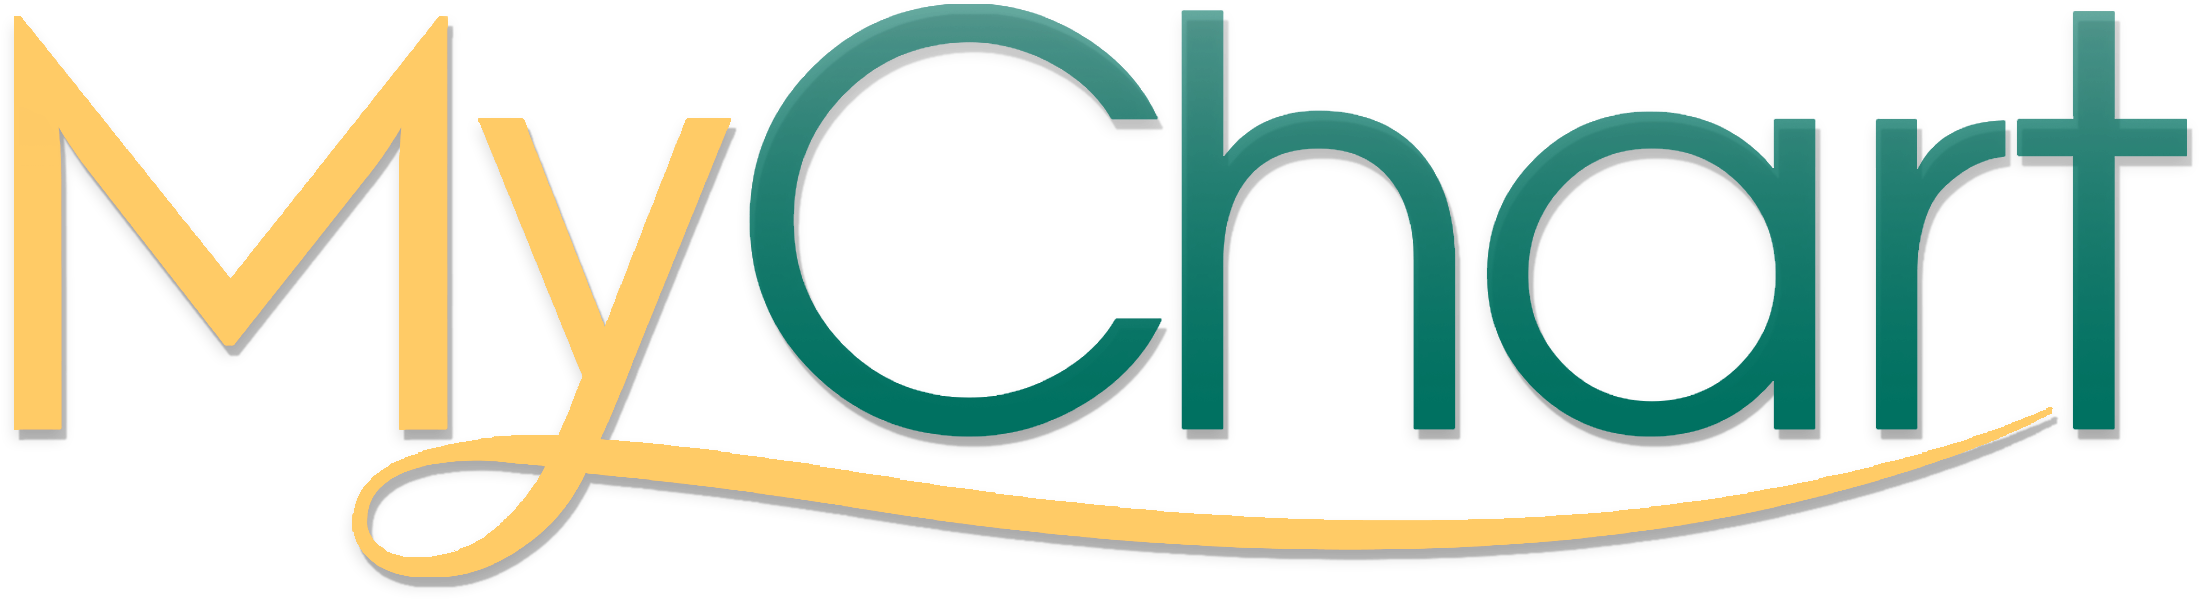 Columbus Regional Health Physicians Launches New Patient - Epic Mychart Logo (2550x864)